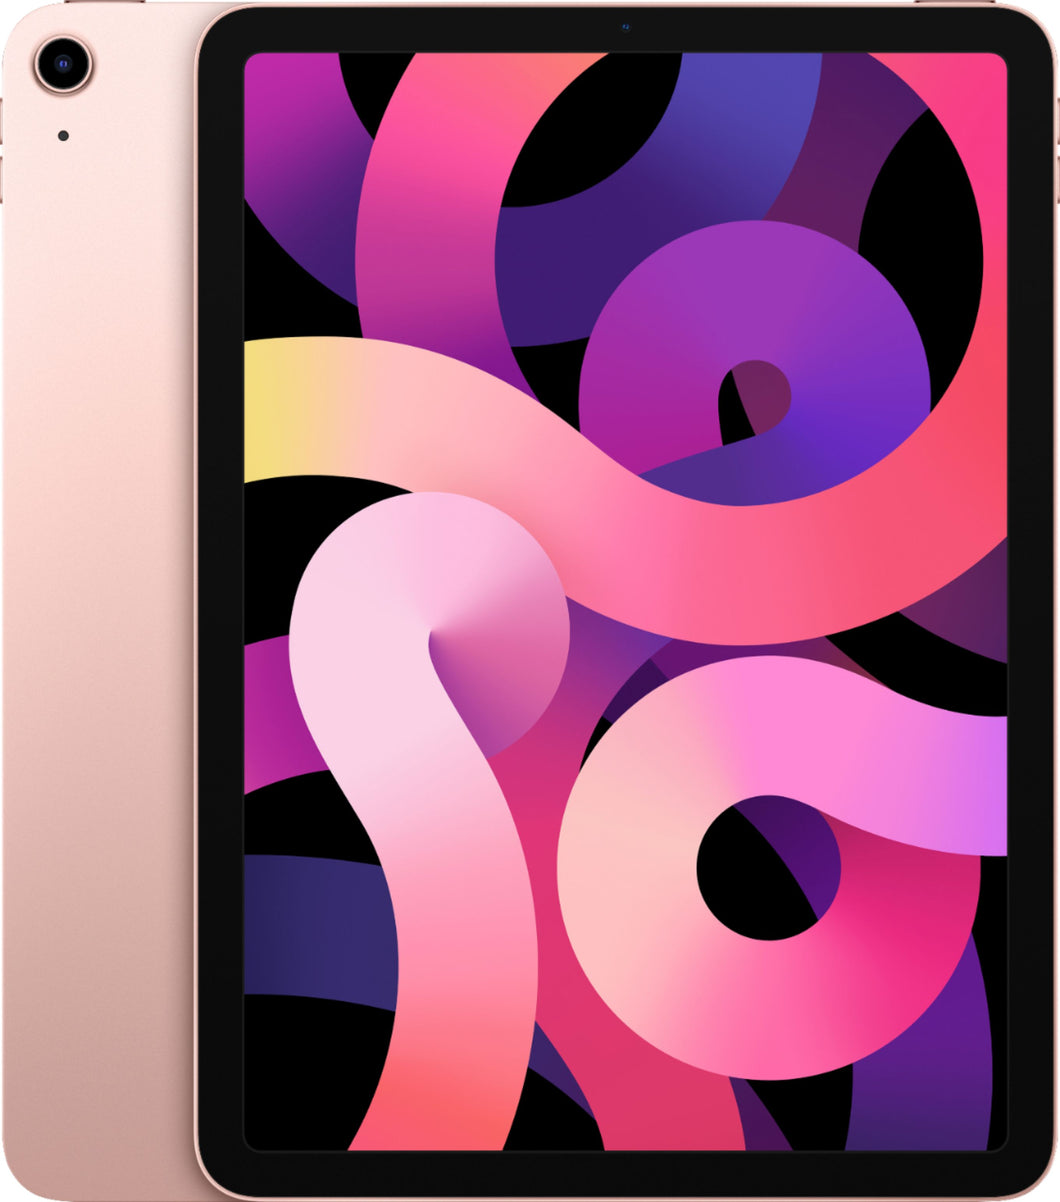 Apple iPad Air 4th Gen. 64GB, Wi-Fi, 10.9 in MYFP2LL/A - Rose Gold